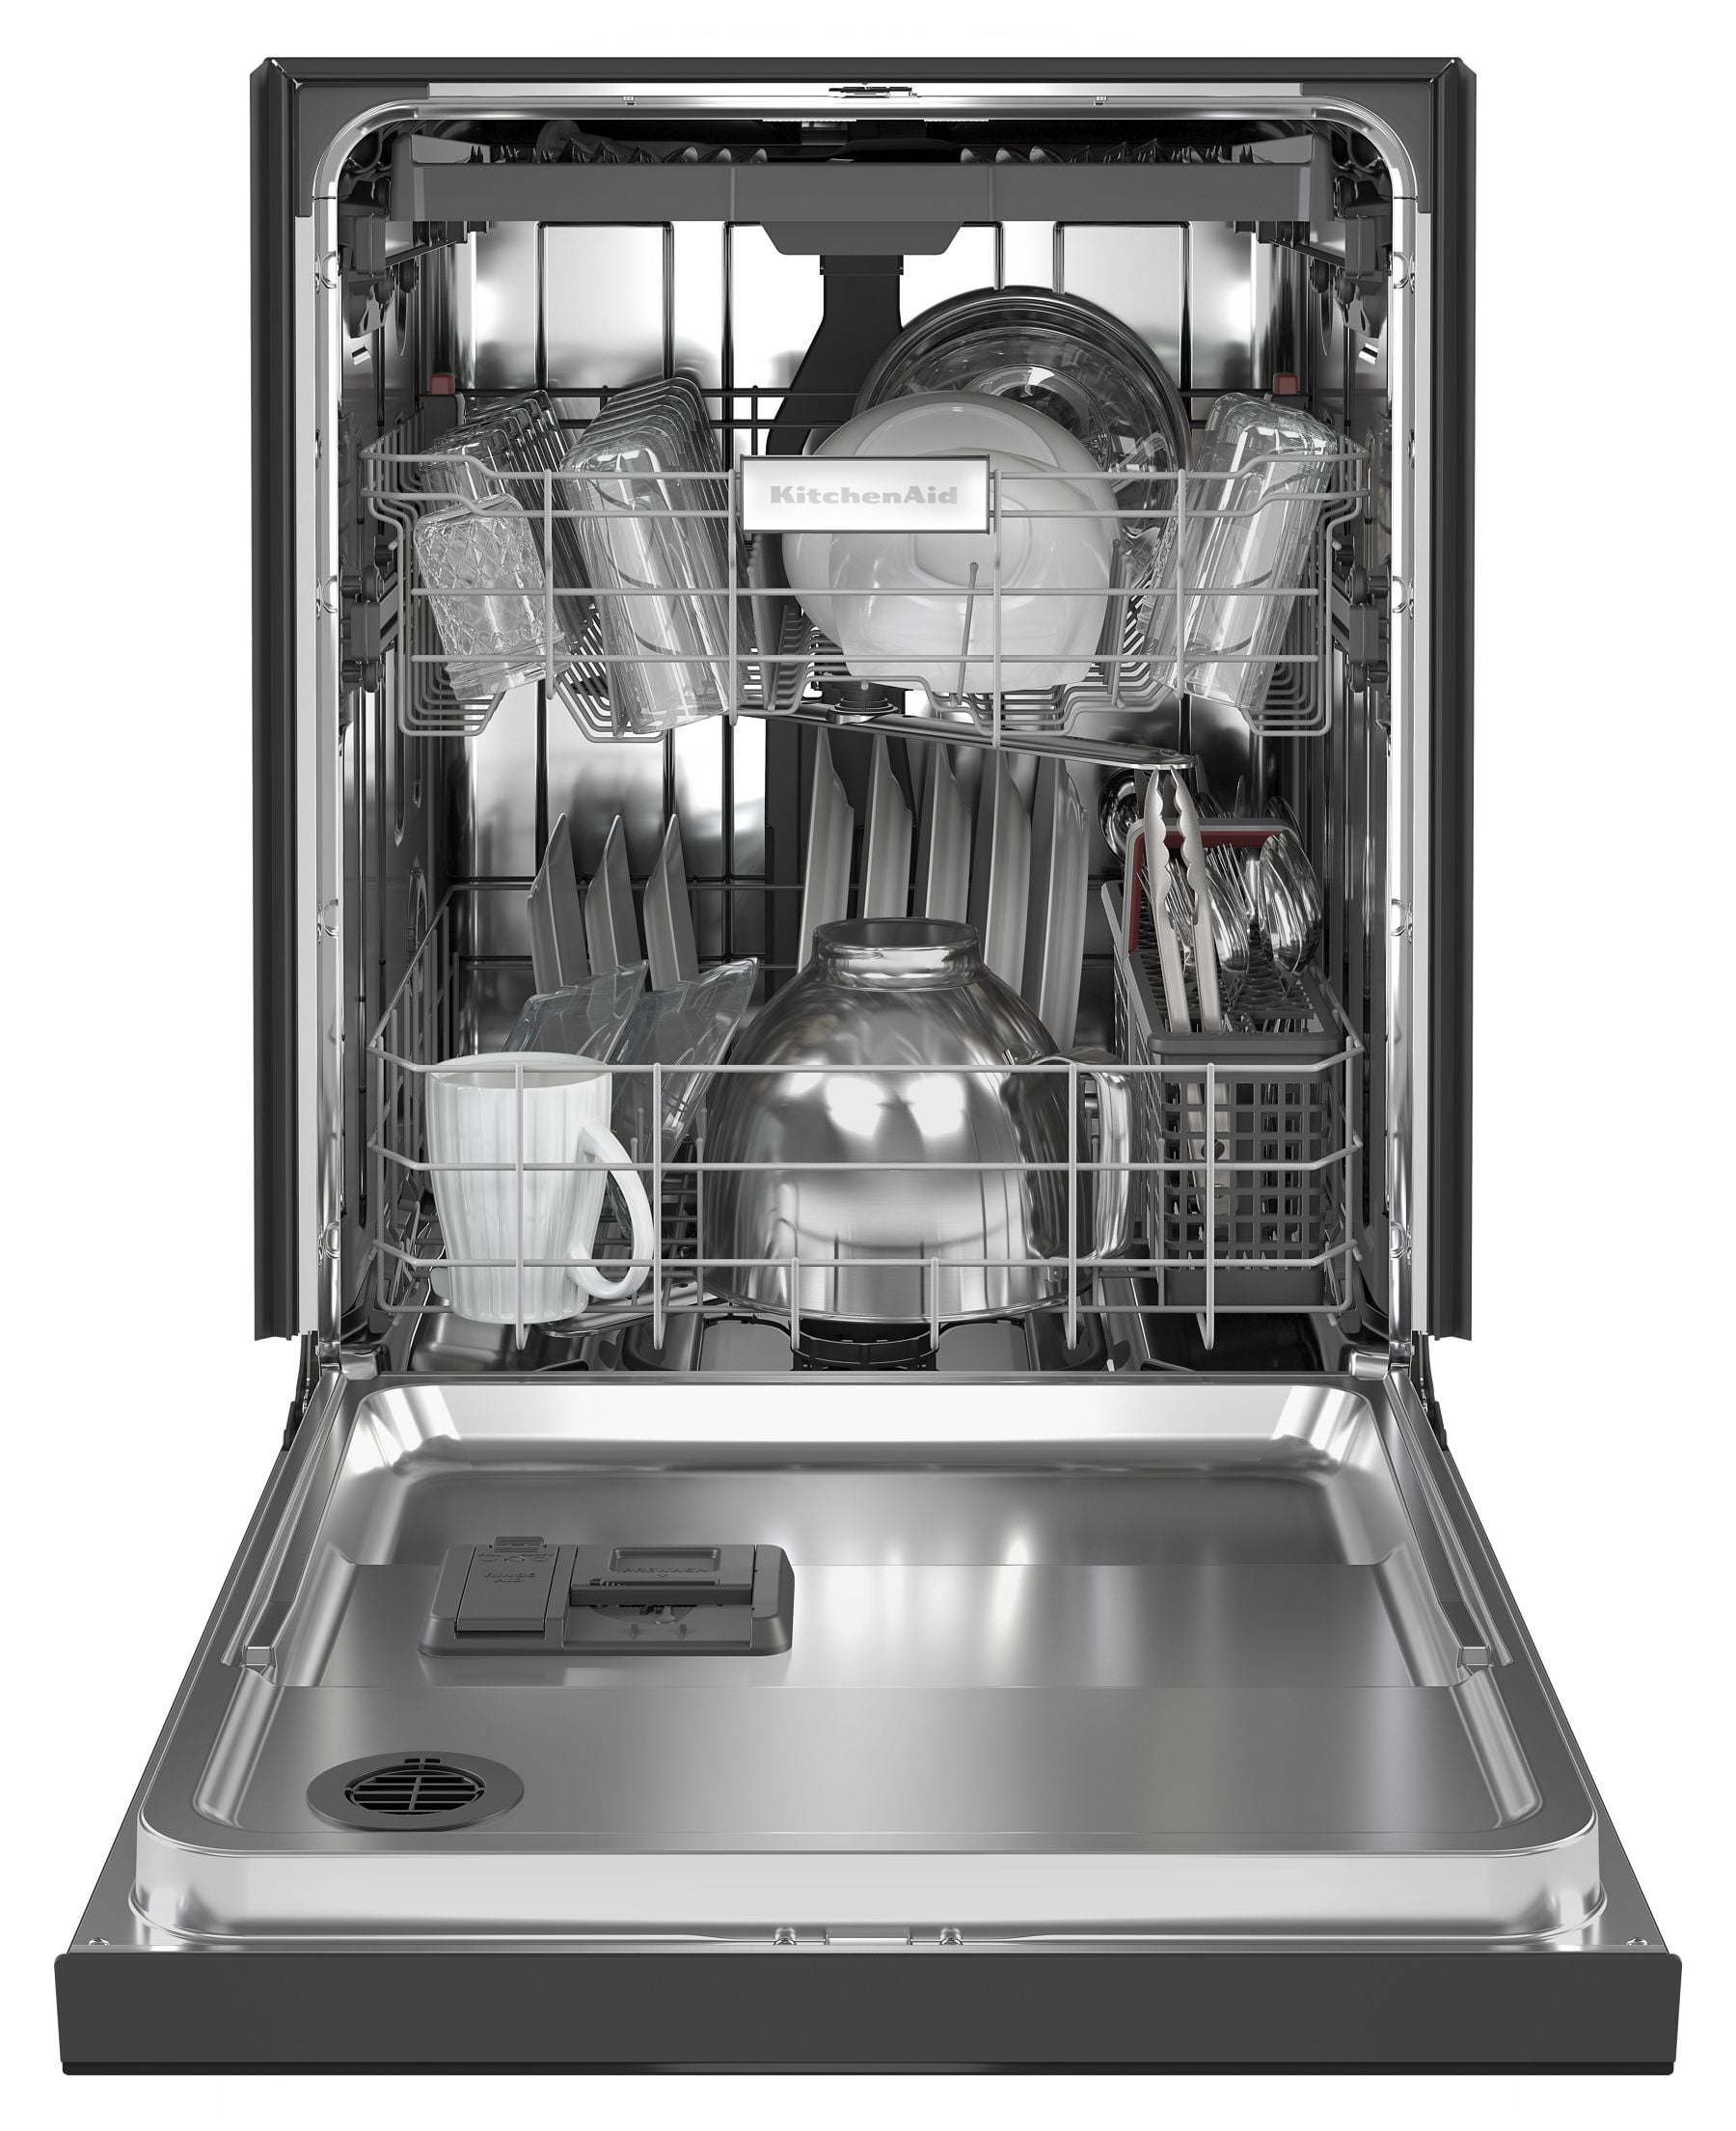 KDFE204KBL by KitchenAid - 39 dBA Dishwasher with Third Level Utensil Rack